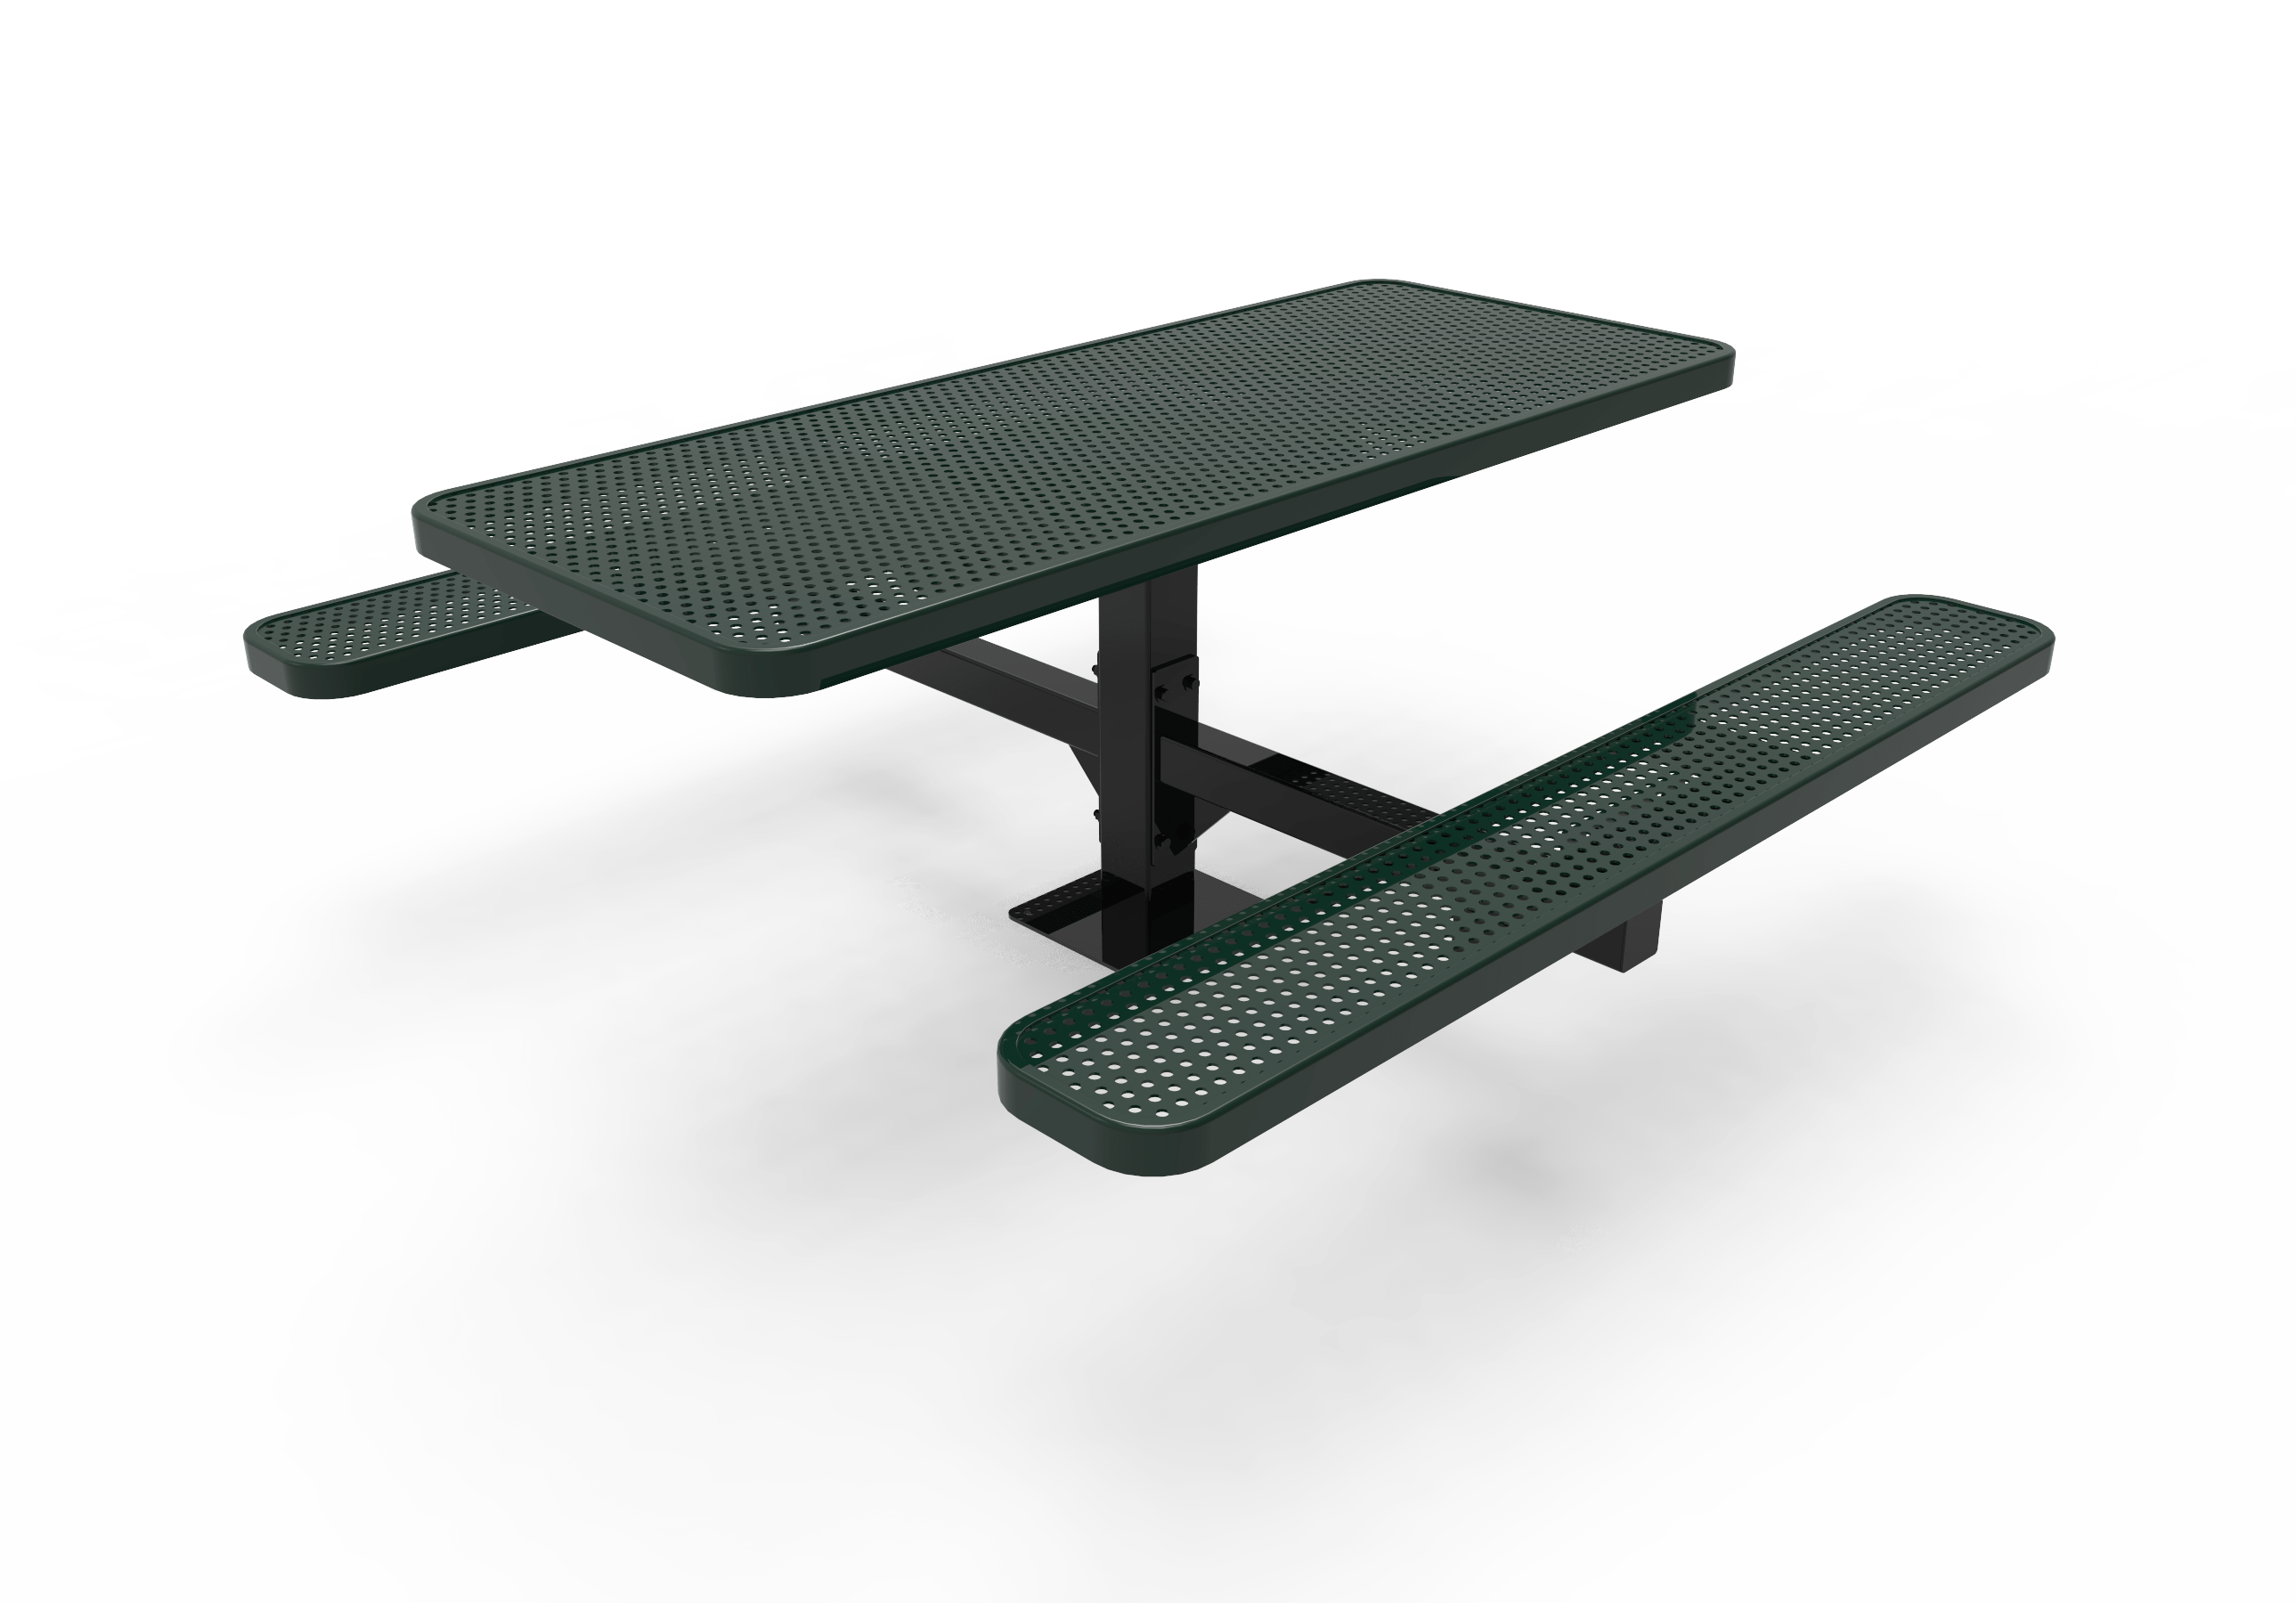 6′ Single Pedestal Picnic Table Surface-Punched
TRT06-D-07-000
Industry Standard Finish
$1499.00
TRT06-B-07-000
Advantage Premium Finish
$1849.00
